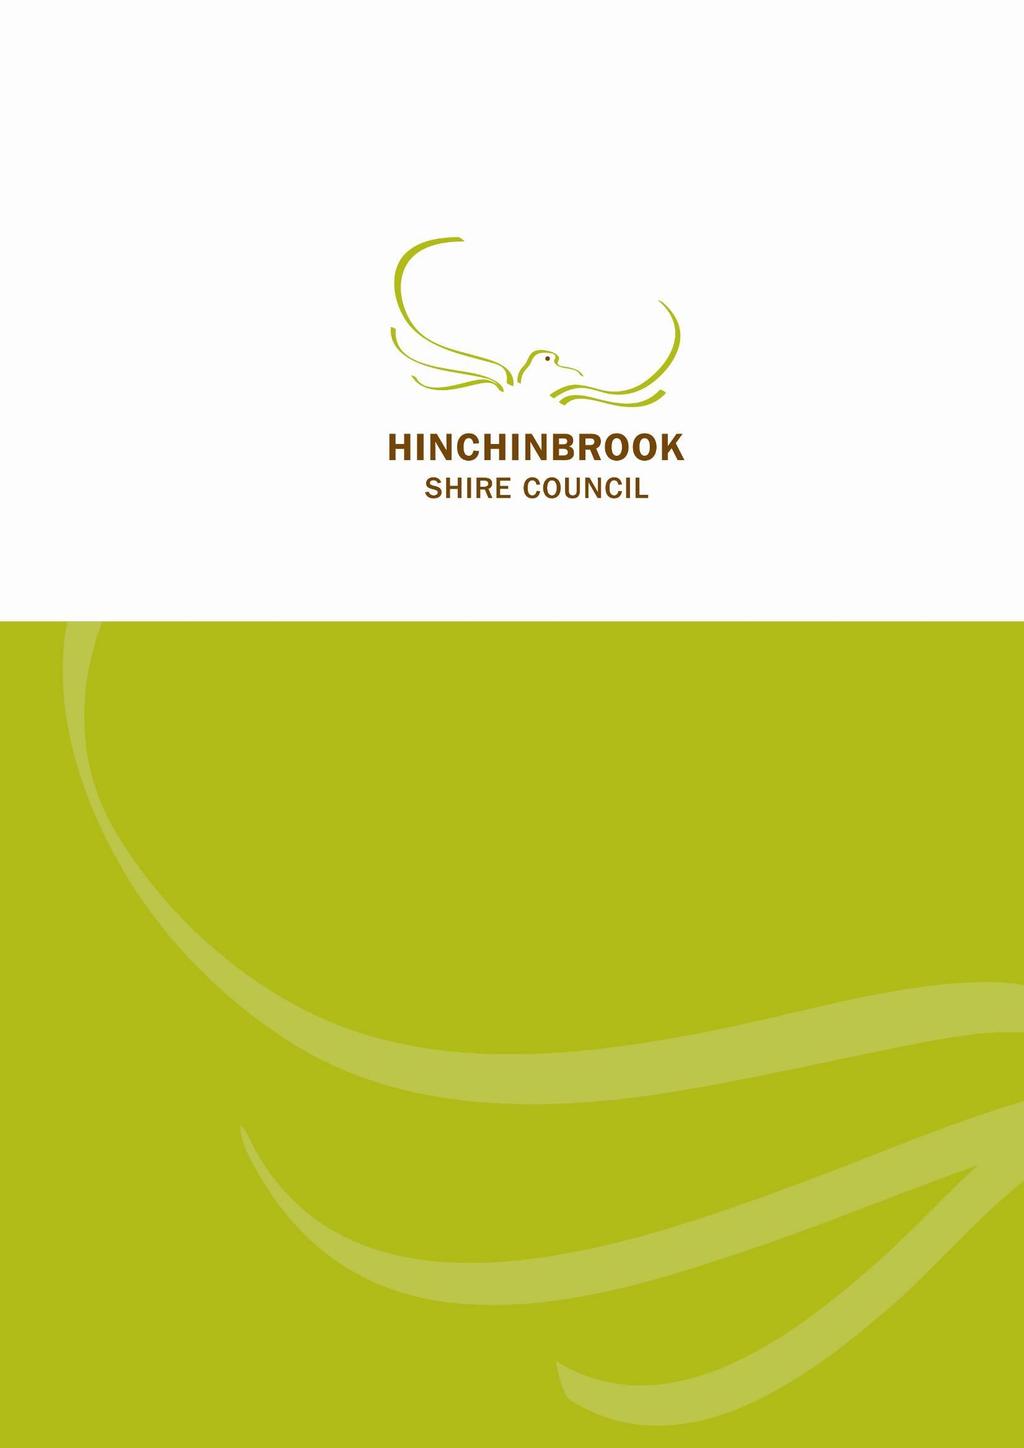 HINCHINBROOK SHIRE COUNCIL SP62 PO BOX 366 INGHAM QLD 4850 Phone: (07) 4776 4600 Email: council@hinchinbrook.qld.gov.